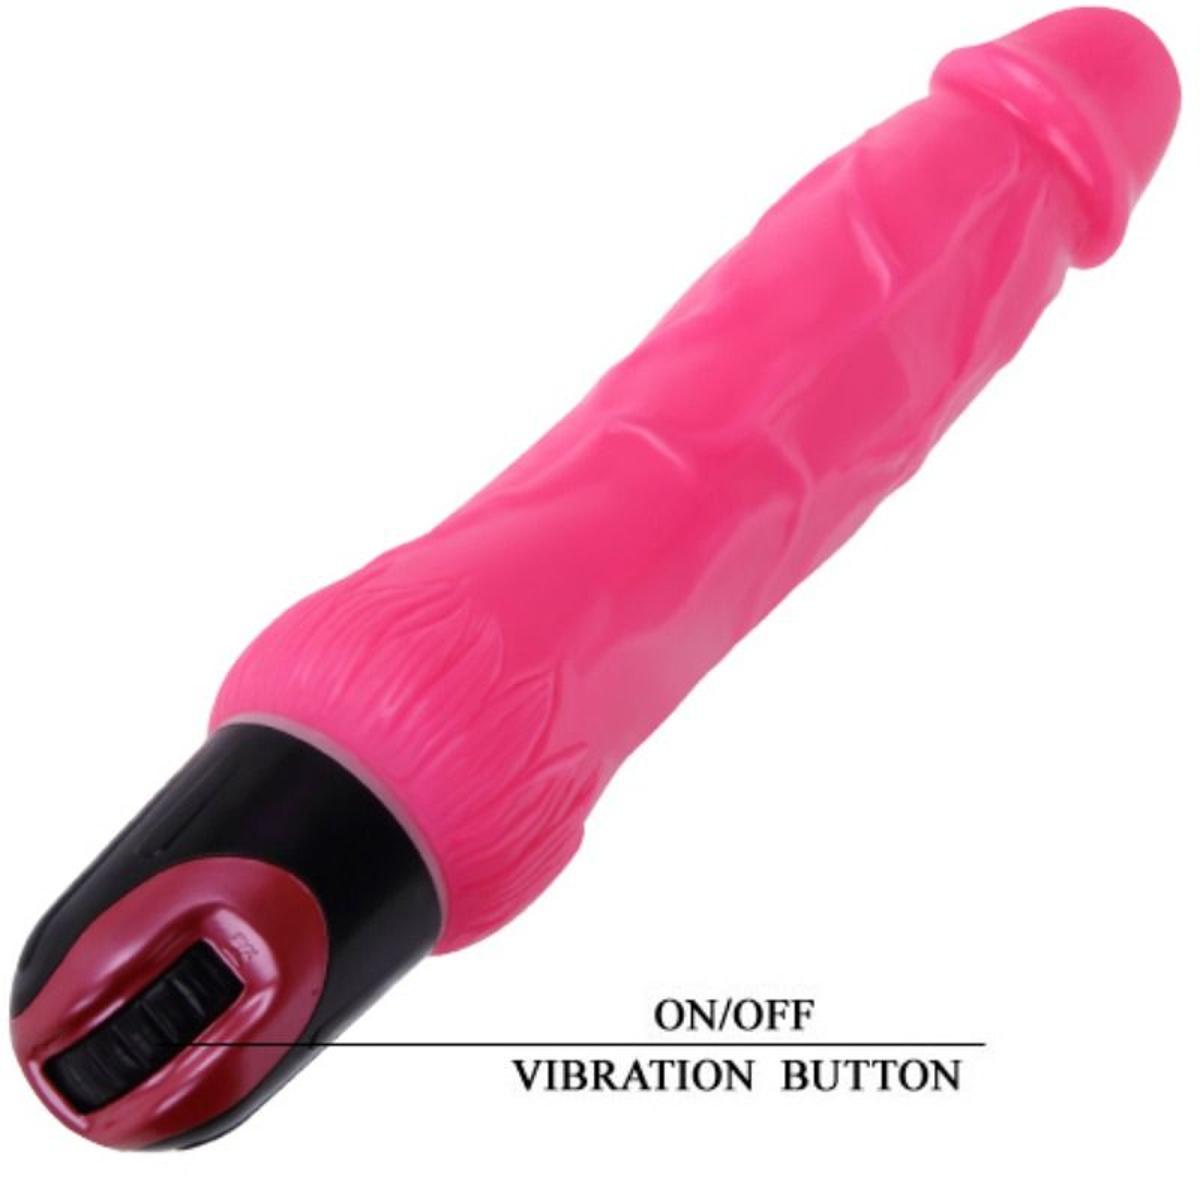 G-Punkt Vibrator "Daaply Pleasure" - OH MY! FANTASY